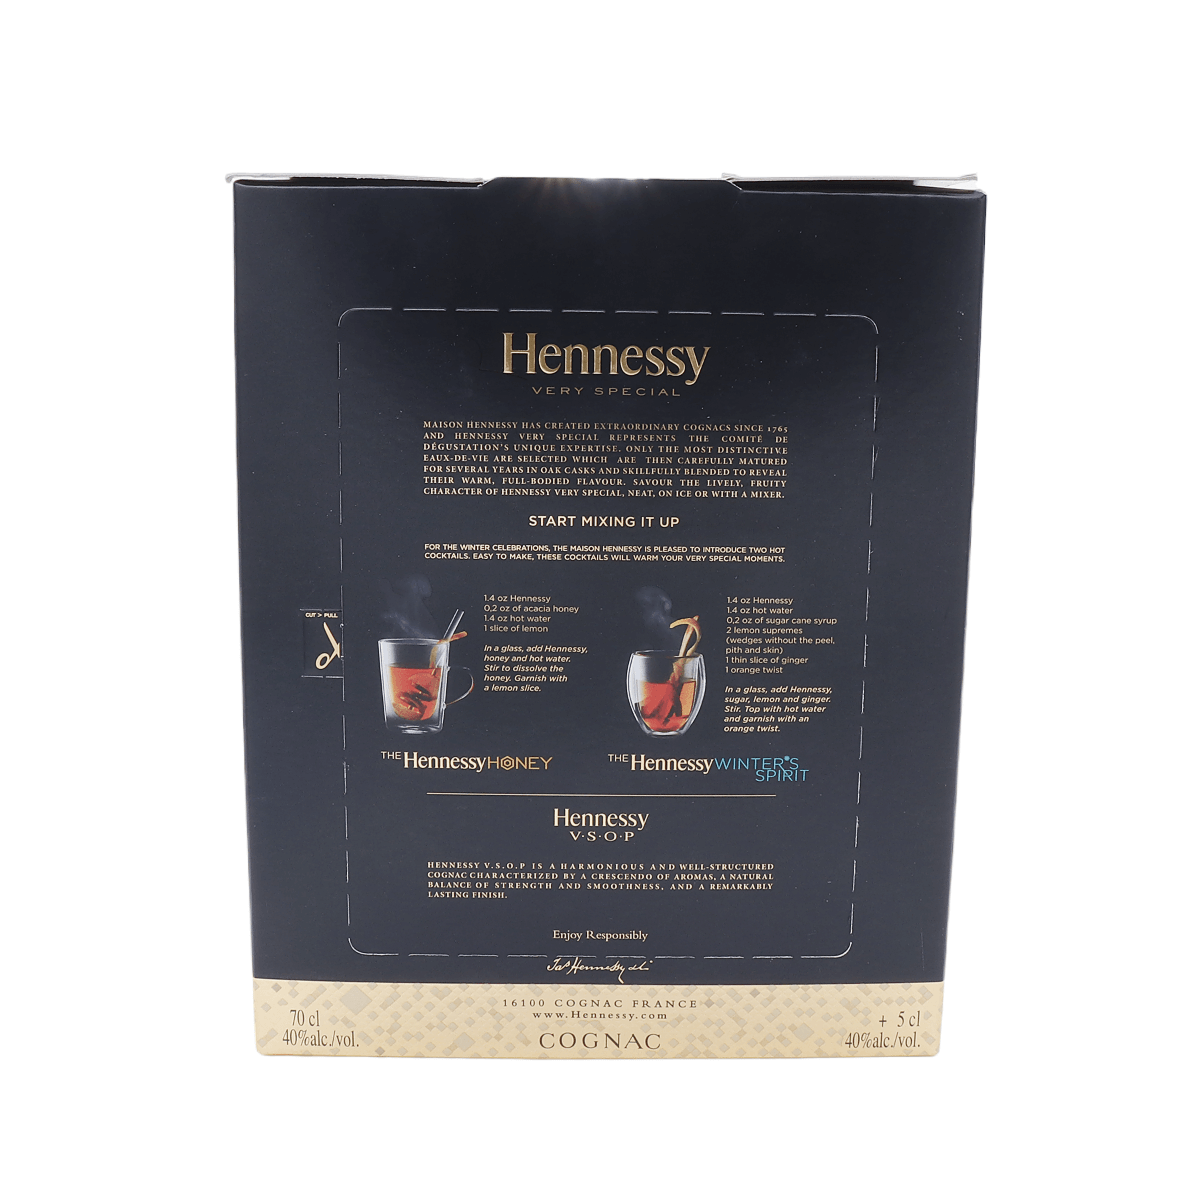 Hennessy VSOP Privilege Cognac, in Gift Box